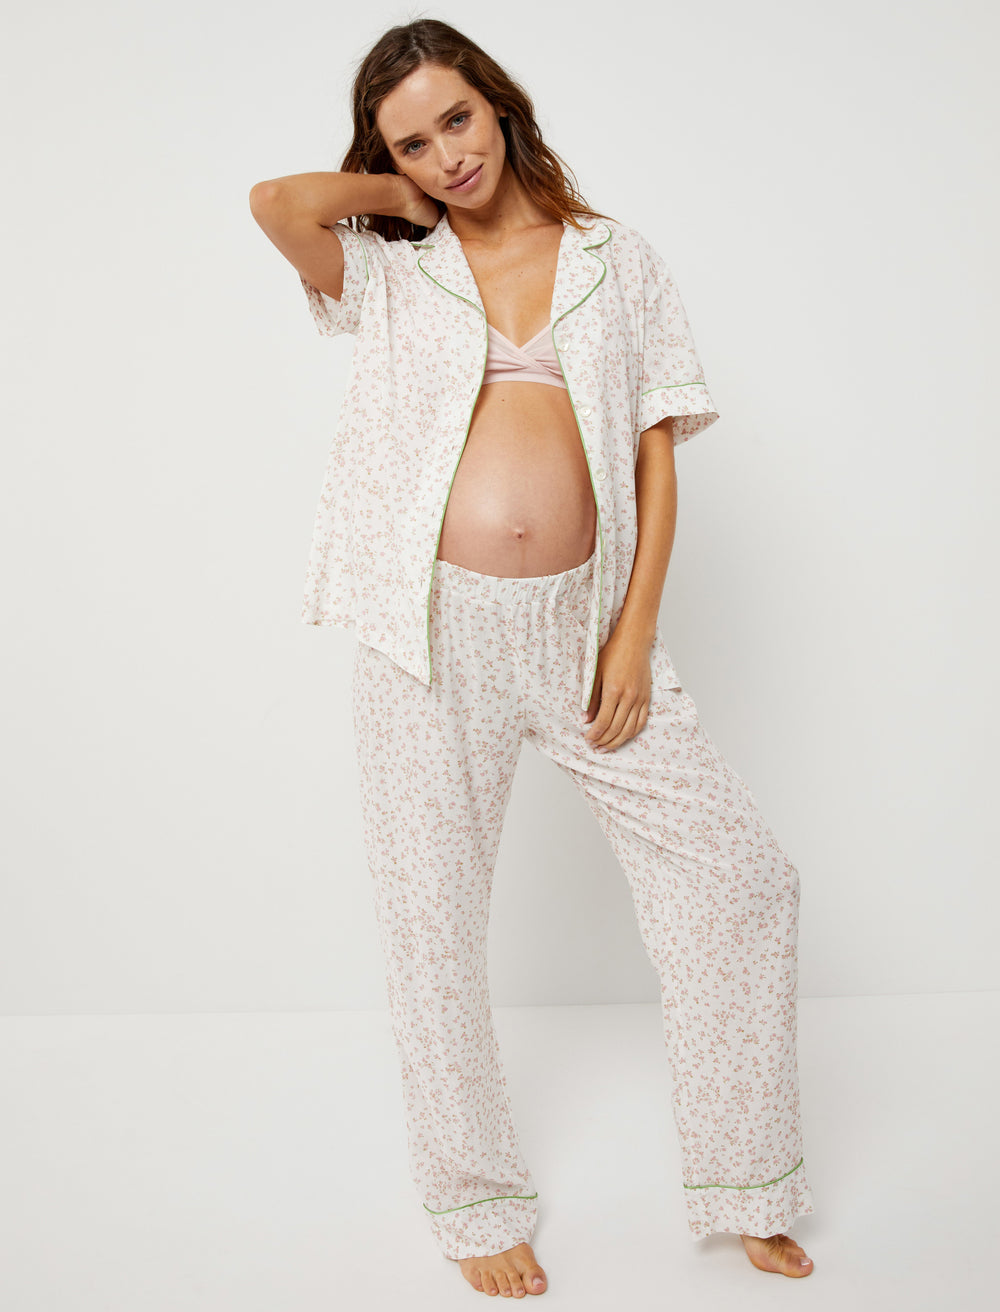 The Sleep Kit - Maternity Sleepwear